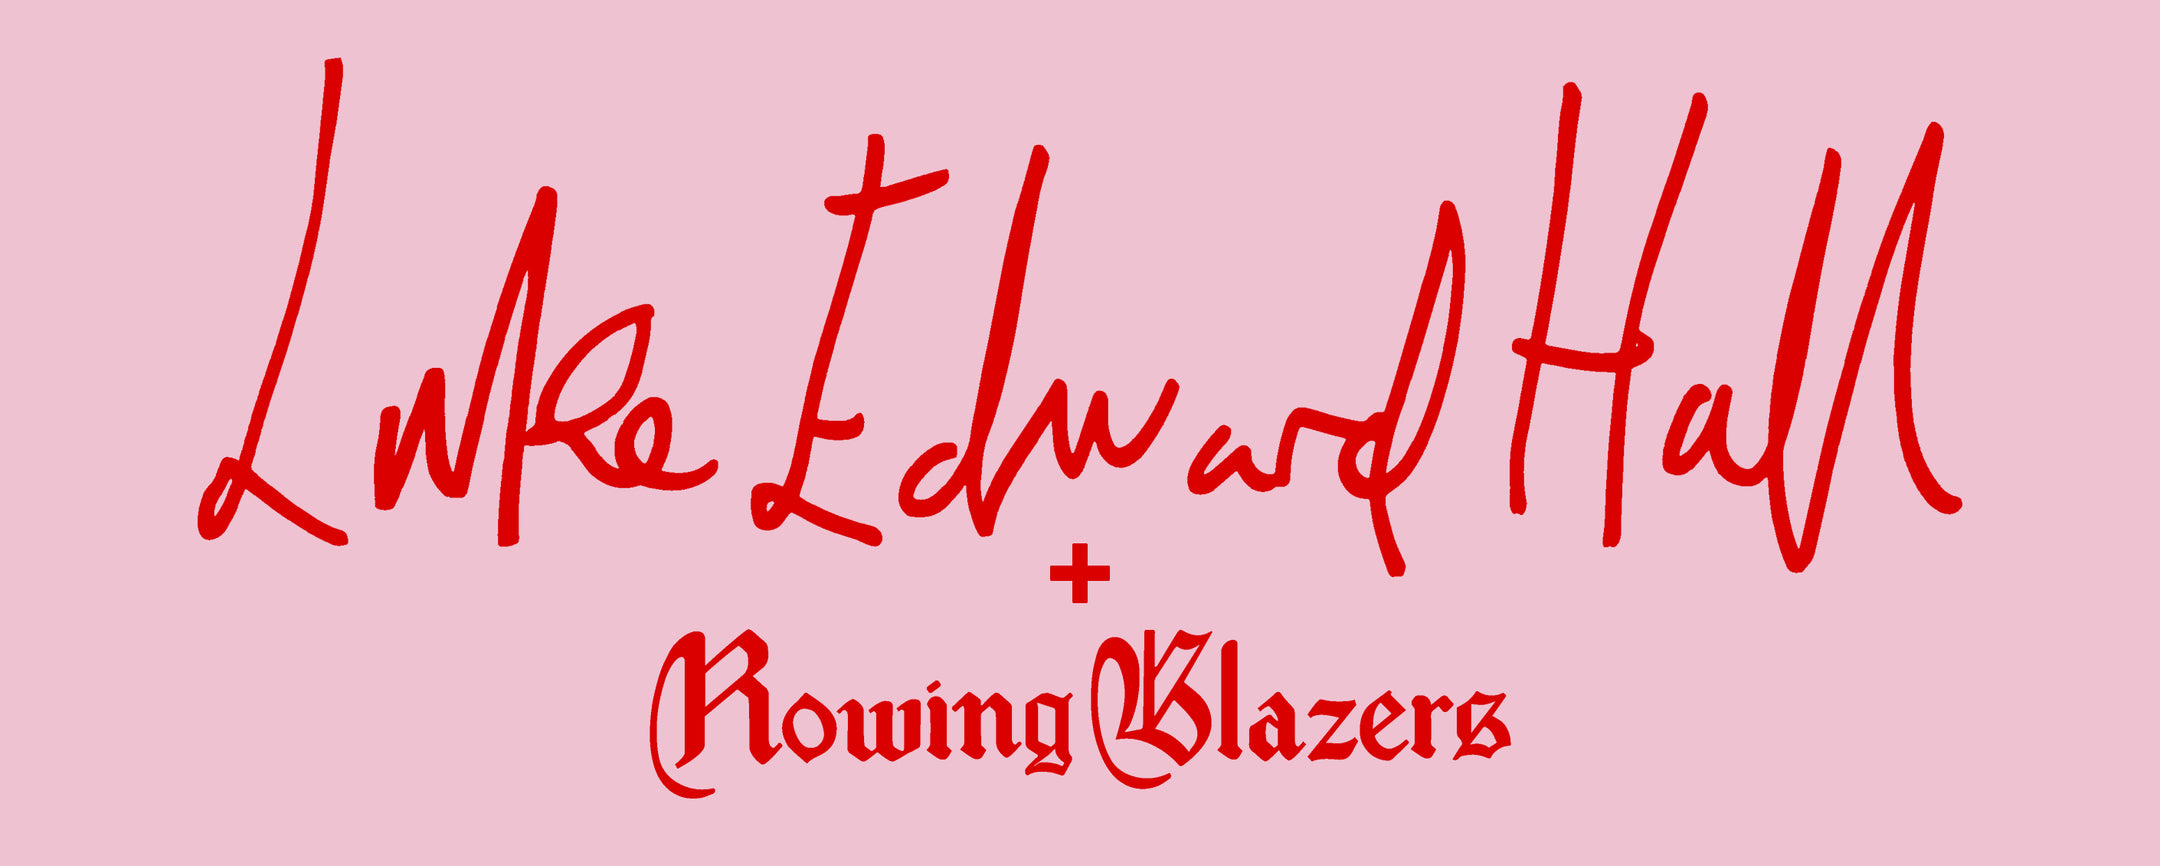 LAUNCH PARTY: ROWING BLAZERS X LUKE EDWARD HALL